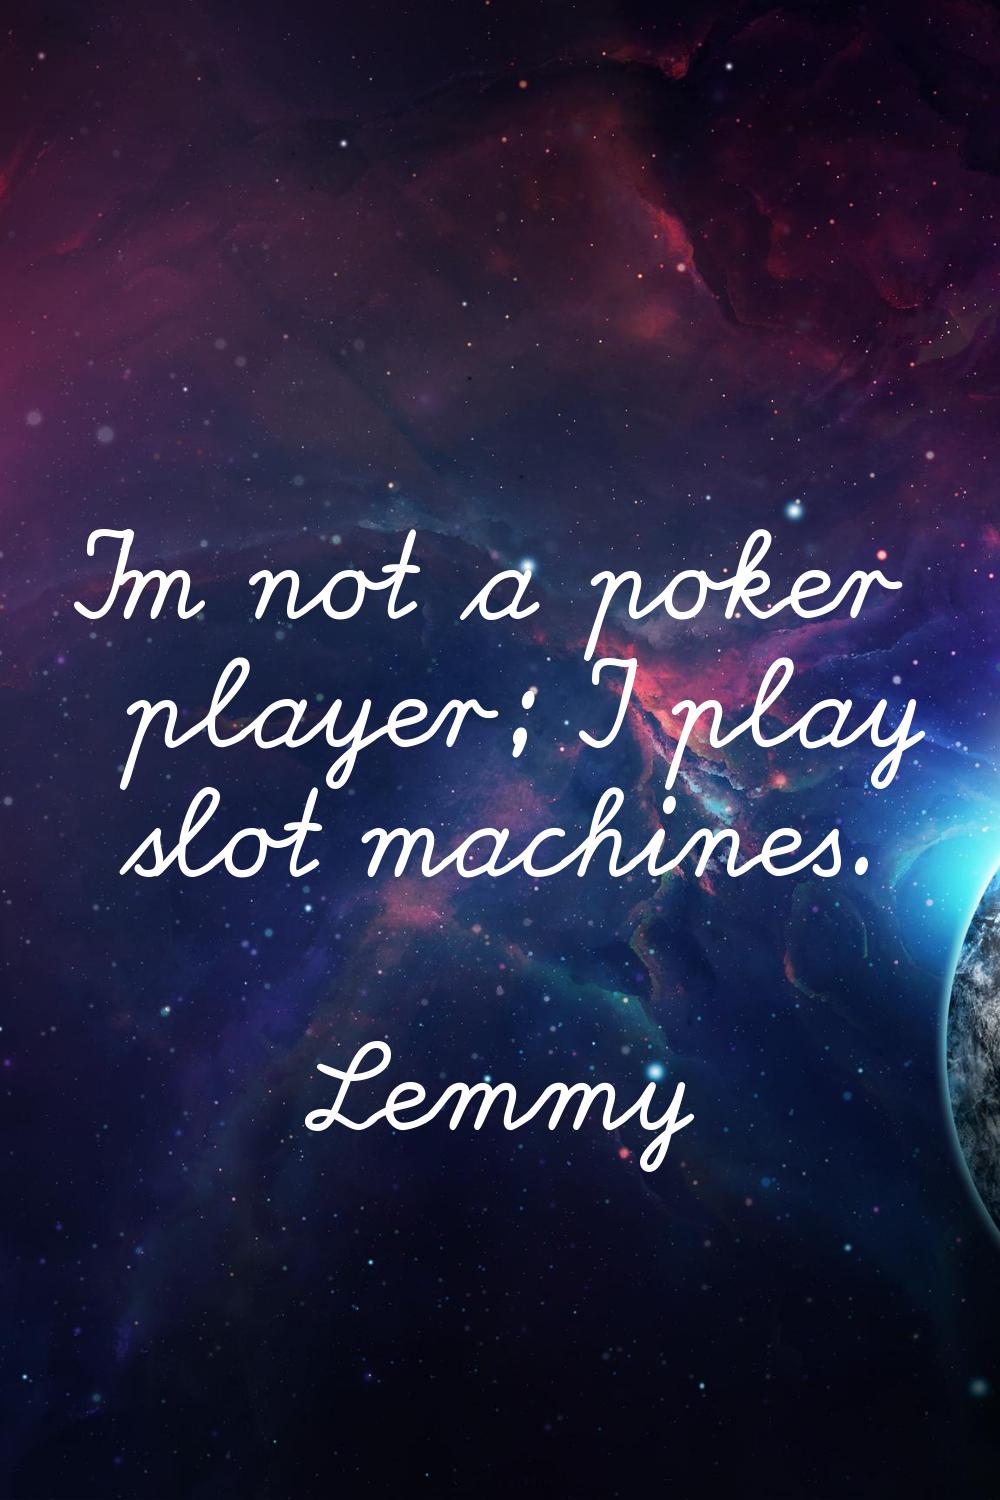 I'm not a poker player; I play slot machines.